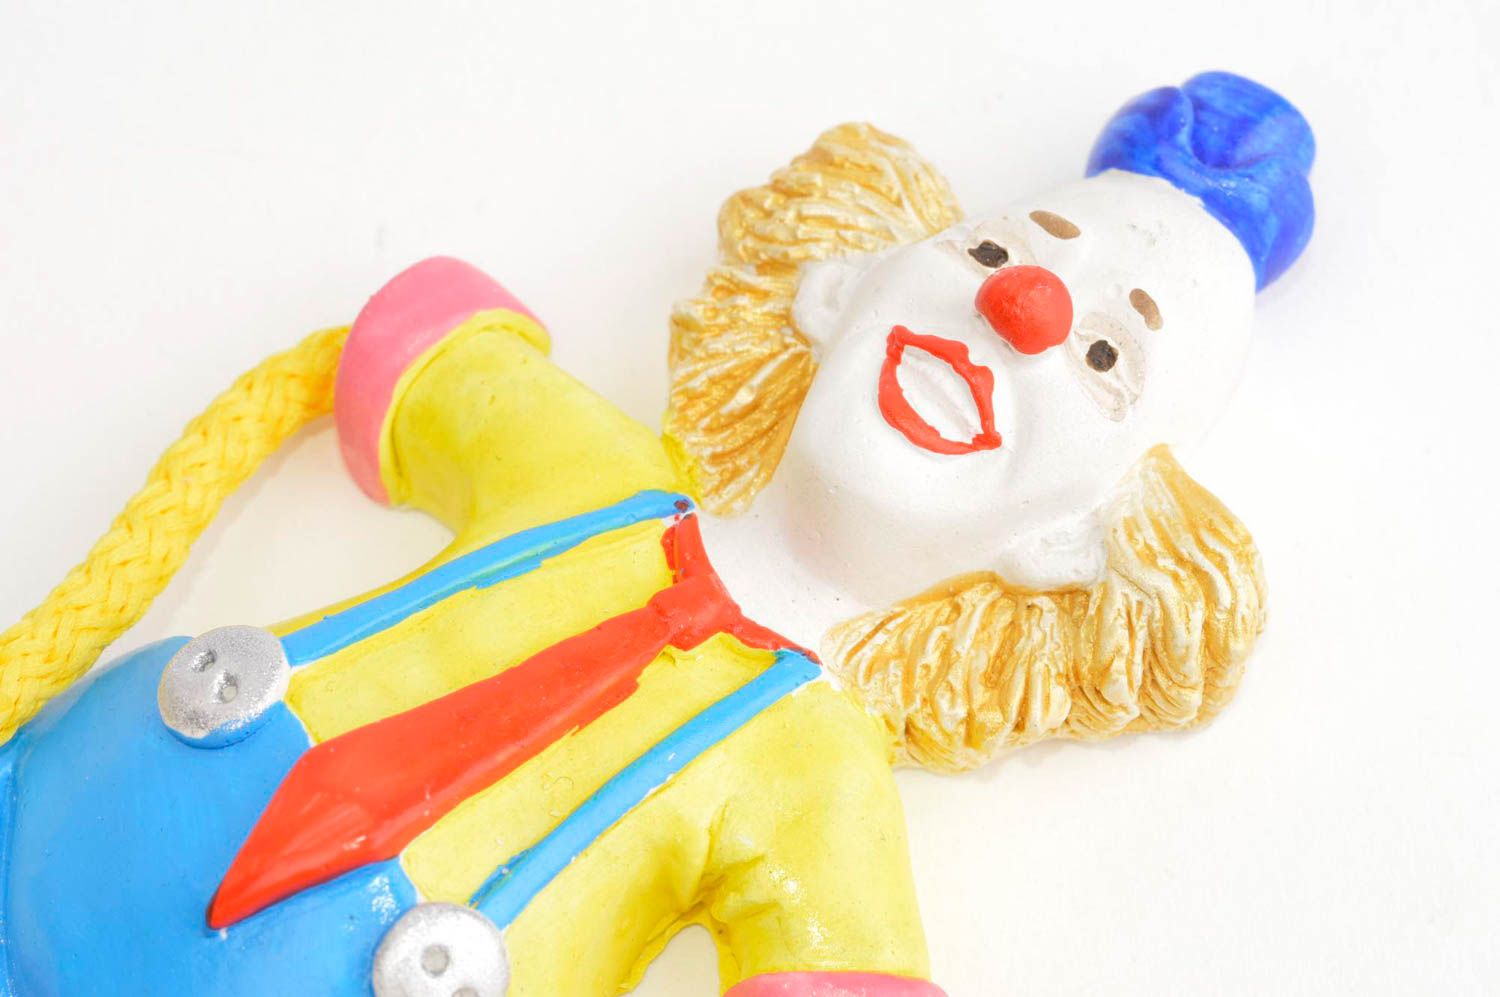 Imán de nevera hecho a mano souvenir original con forma de clown regalo original foto 4